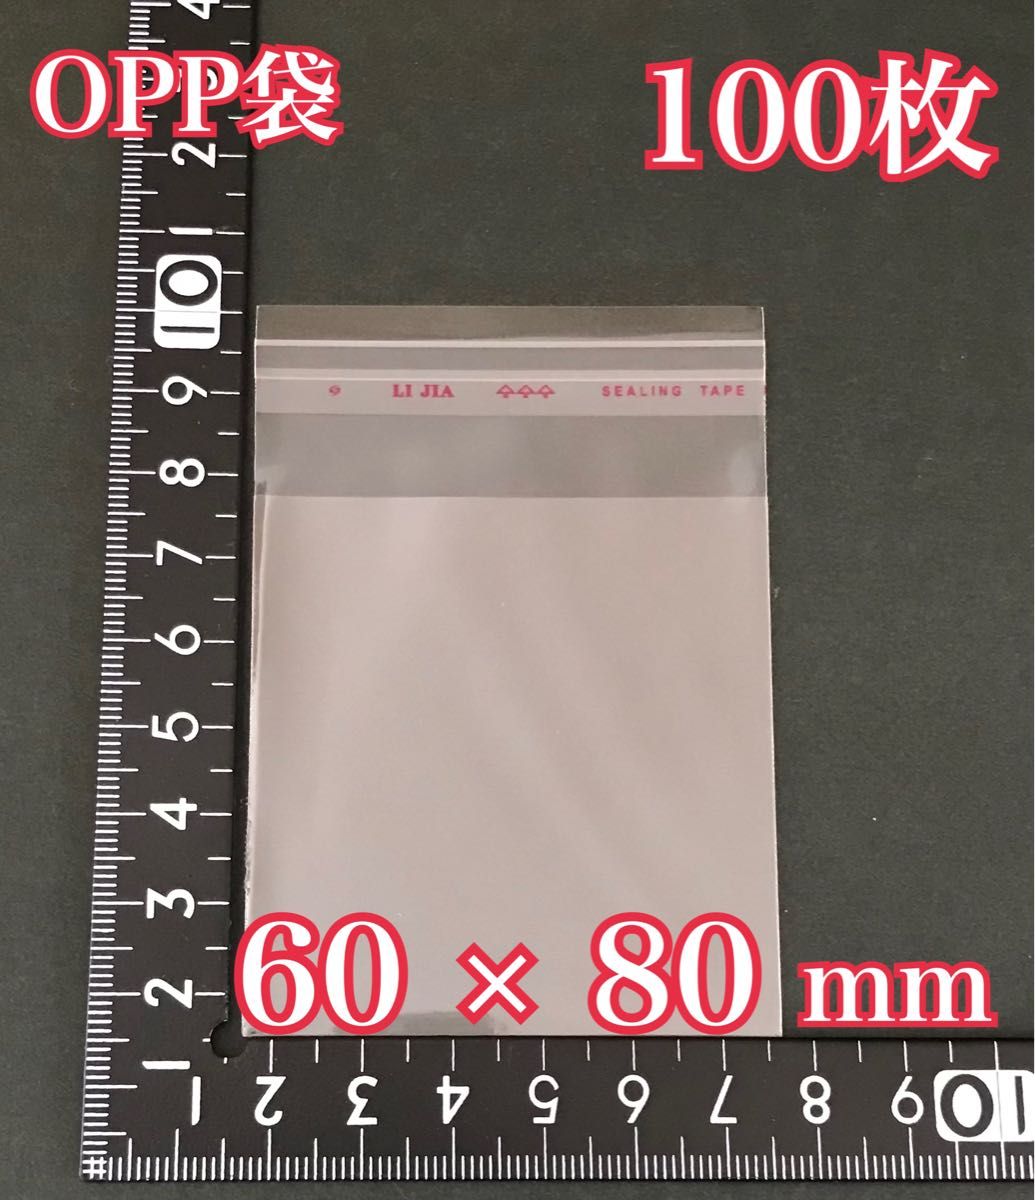 OPP袋テープ付き 60×80mm 100枚